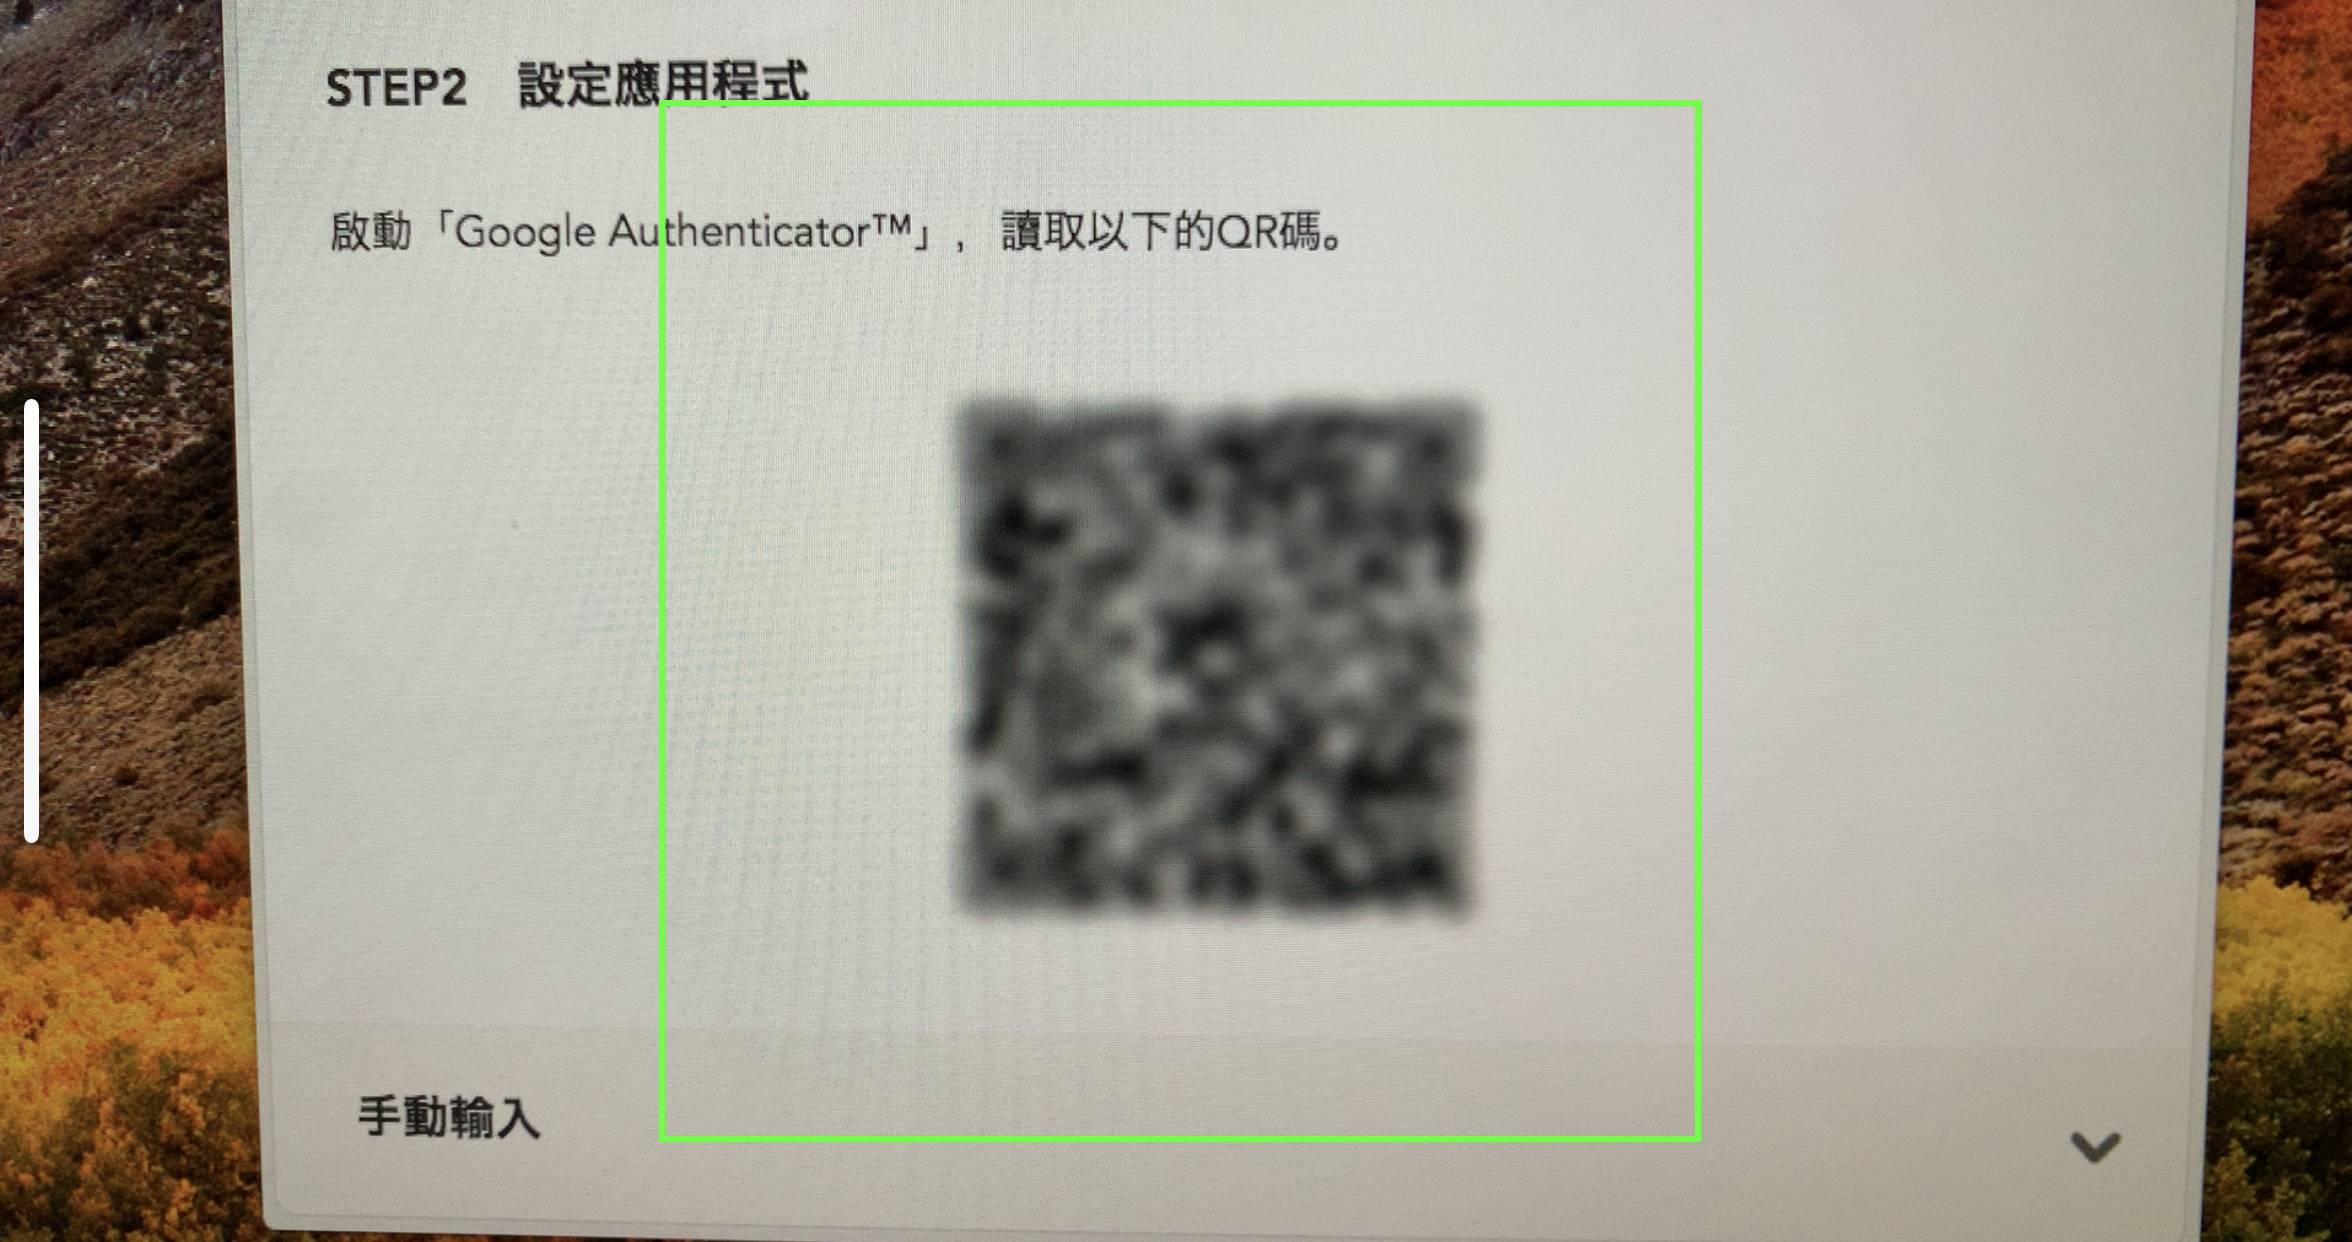 Switch 用應用程式的相機掃描Nintendo Account頁面上出現的QR Code